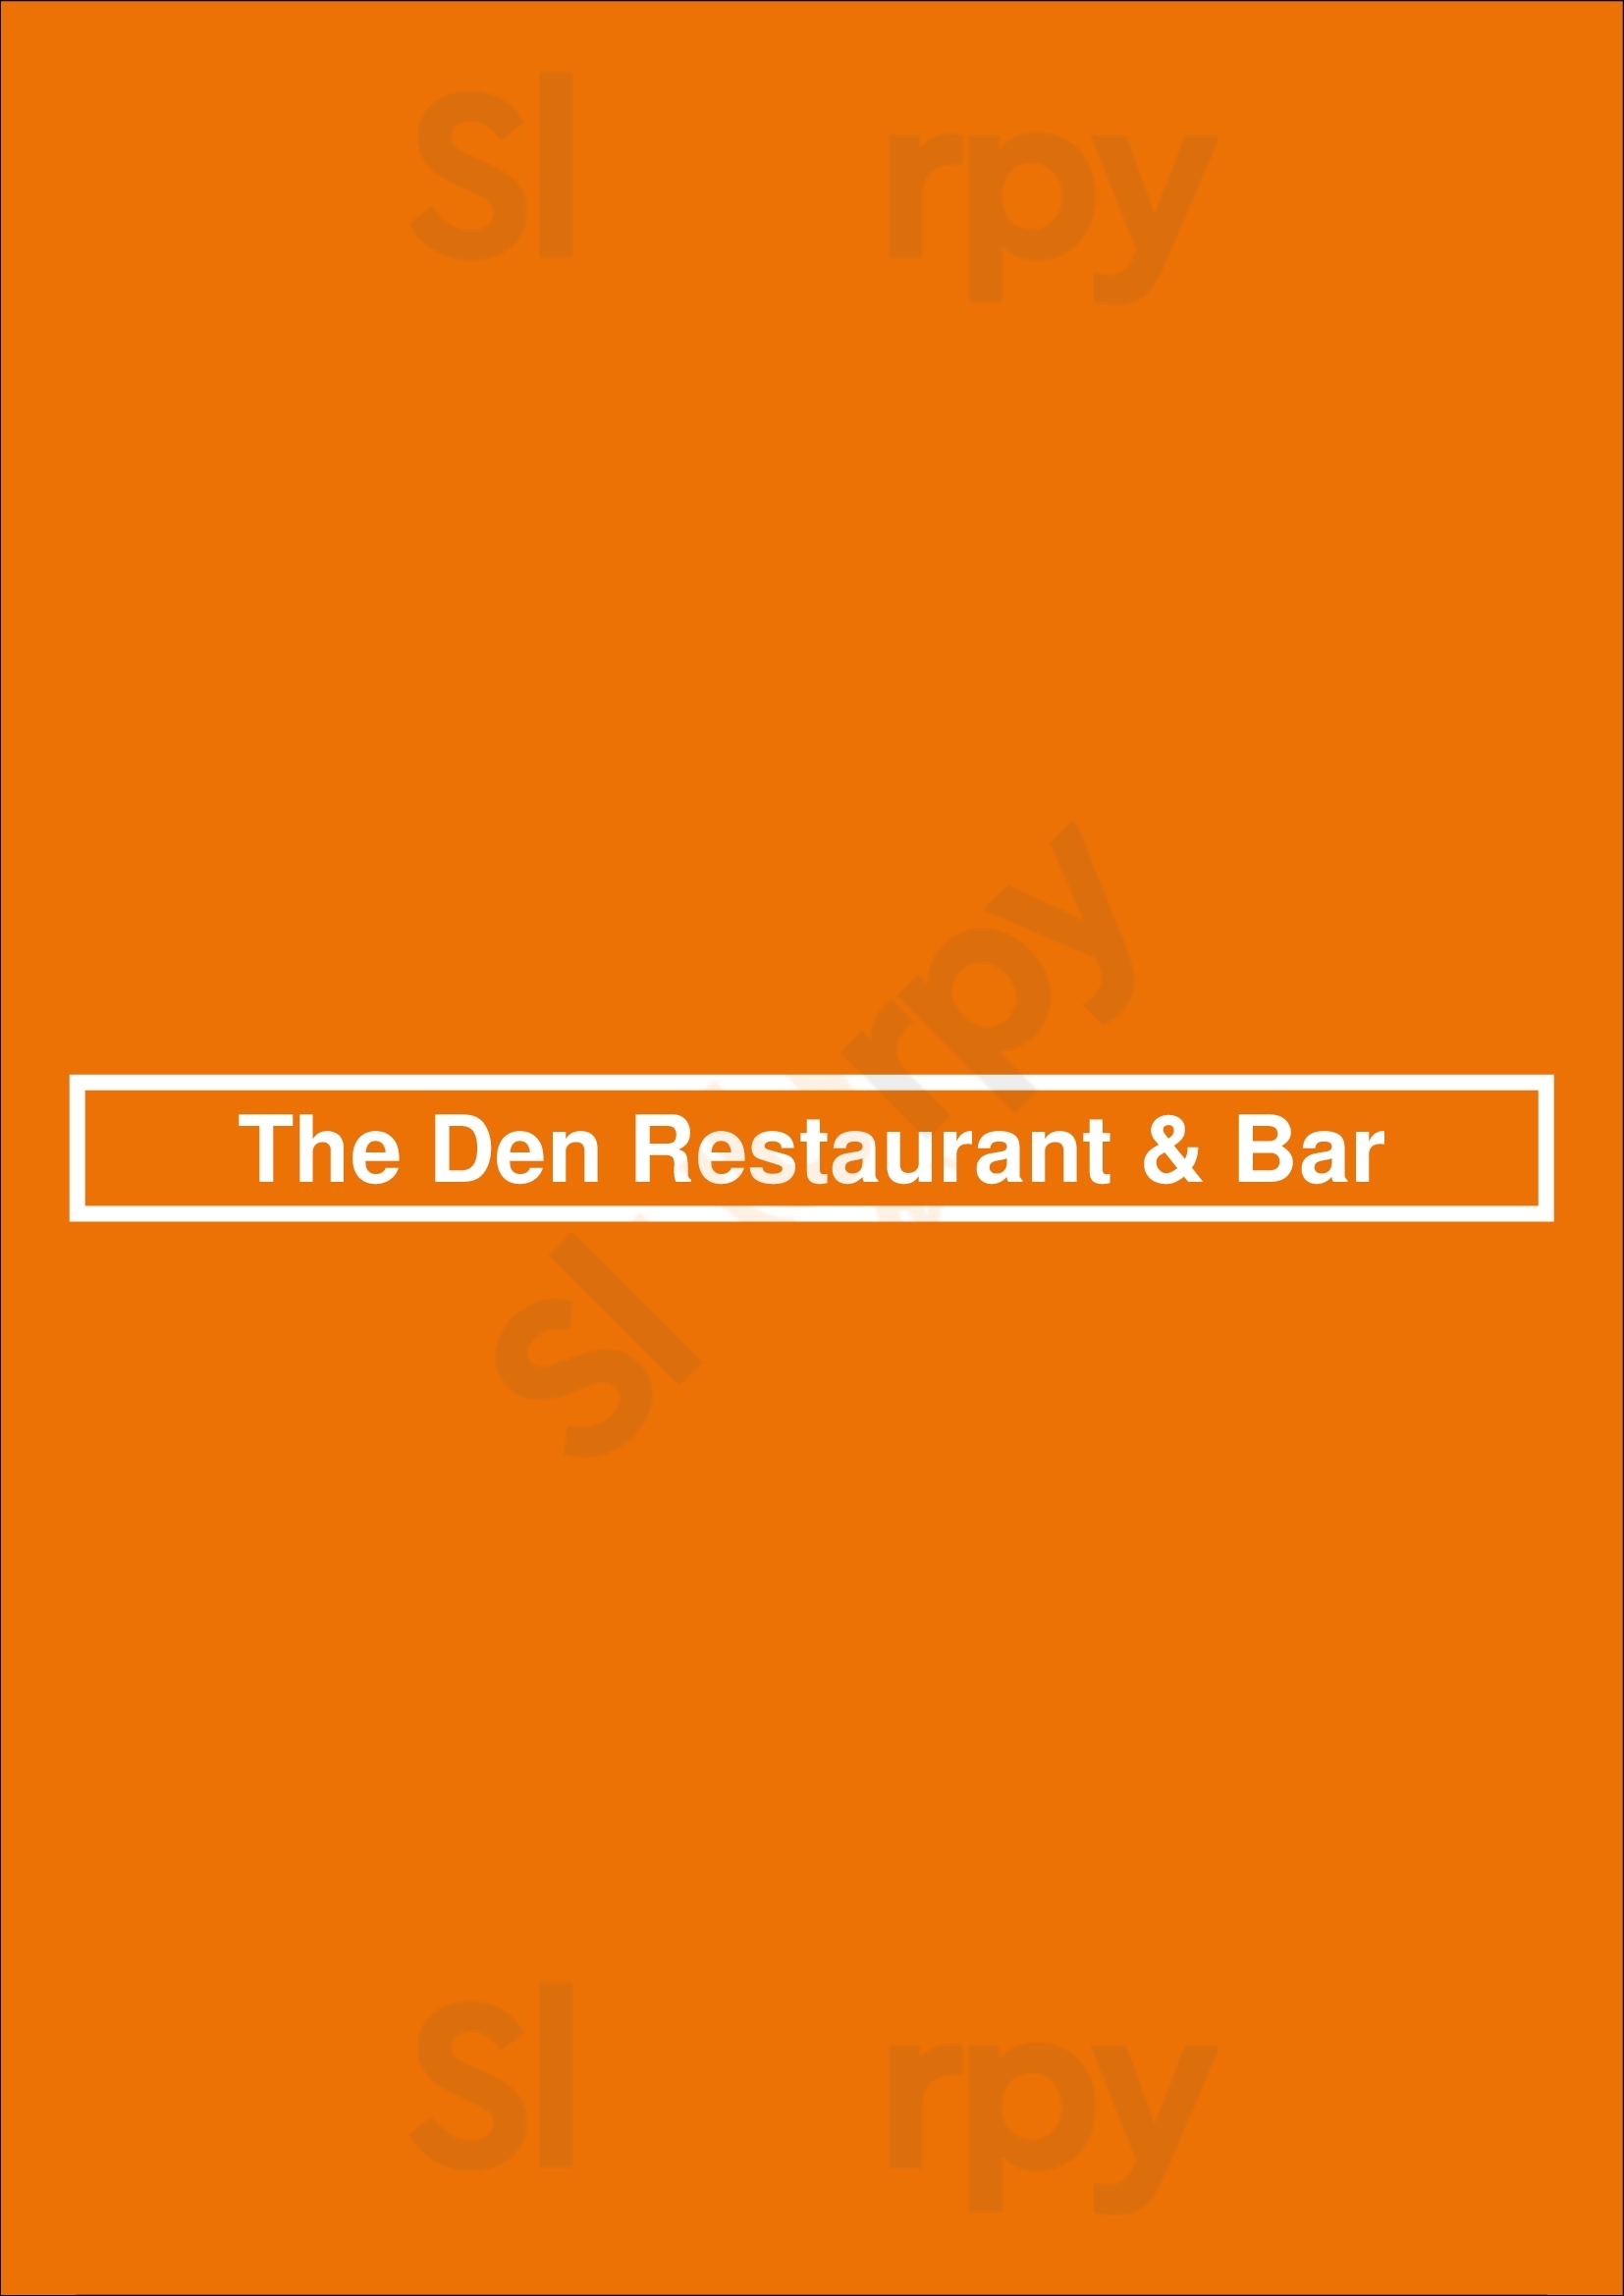 The Den Restaurant & Bar Amsterdam Menu - 1